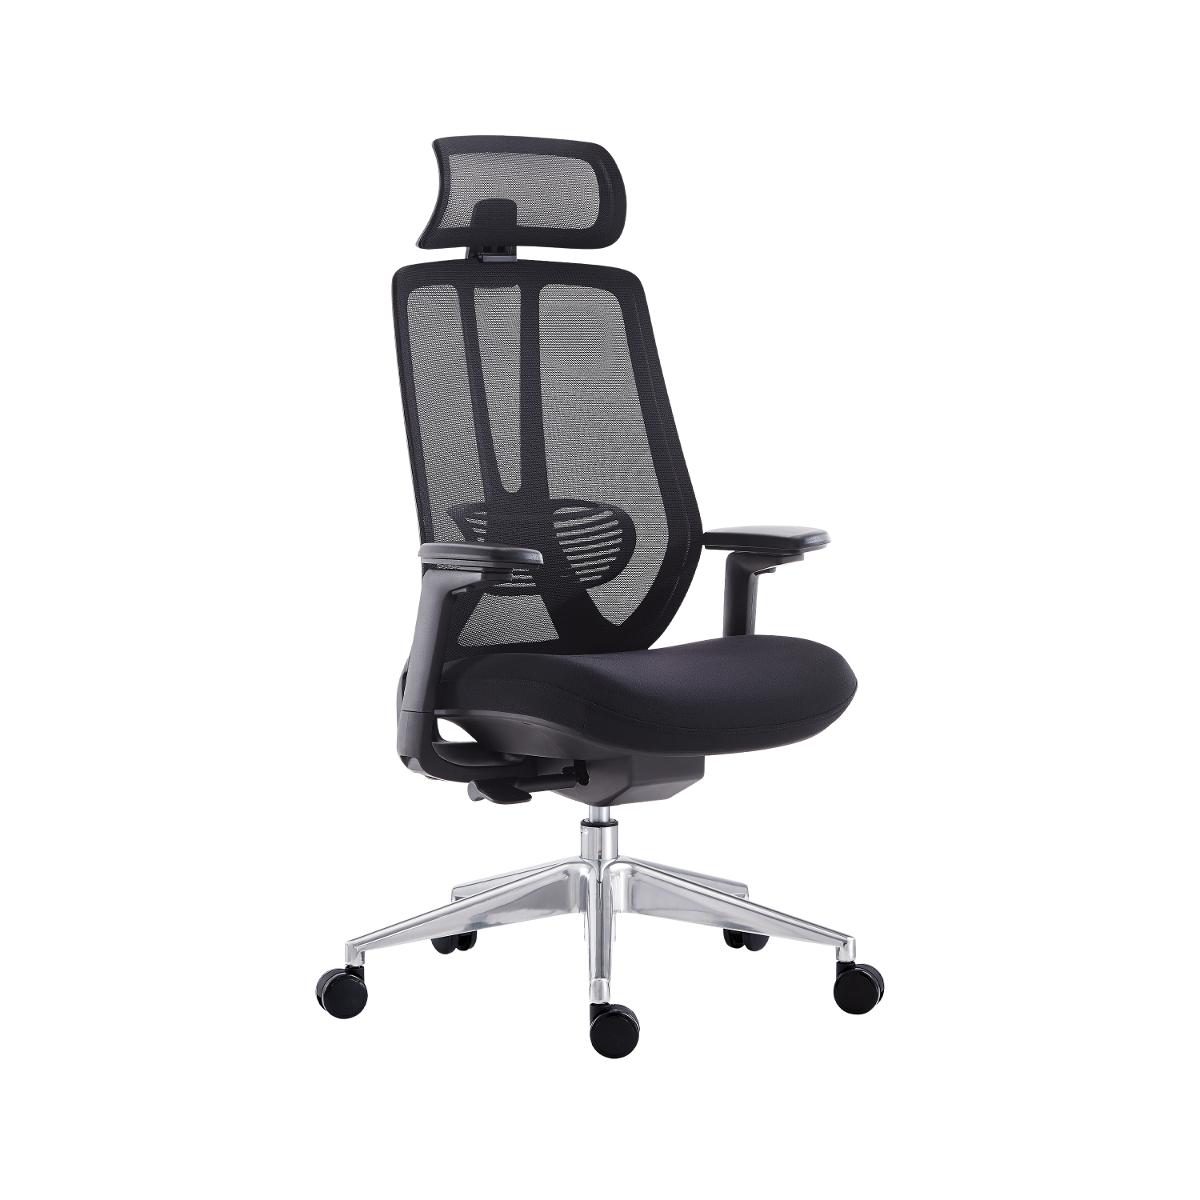 Super Chair เก้าอี้ผู้บริหาร รุ่น 7102-1 H Black